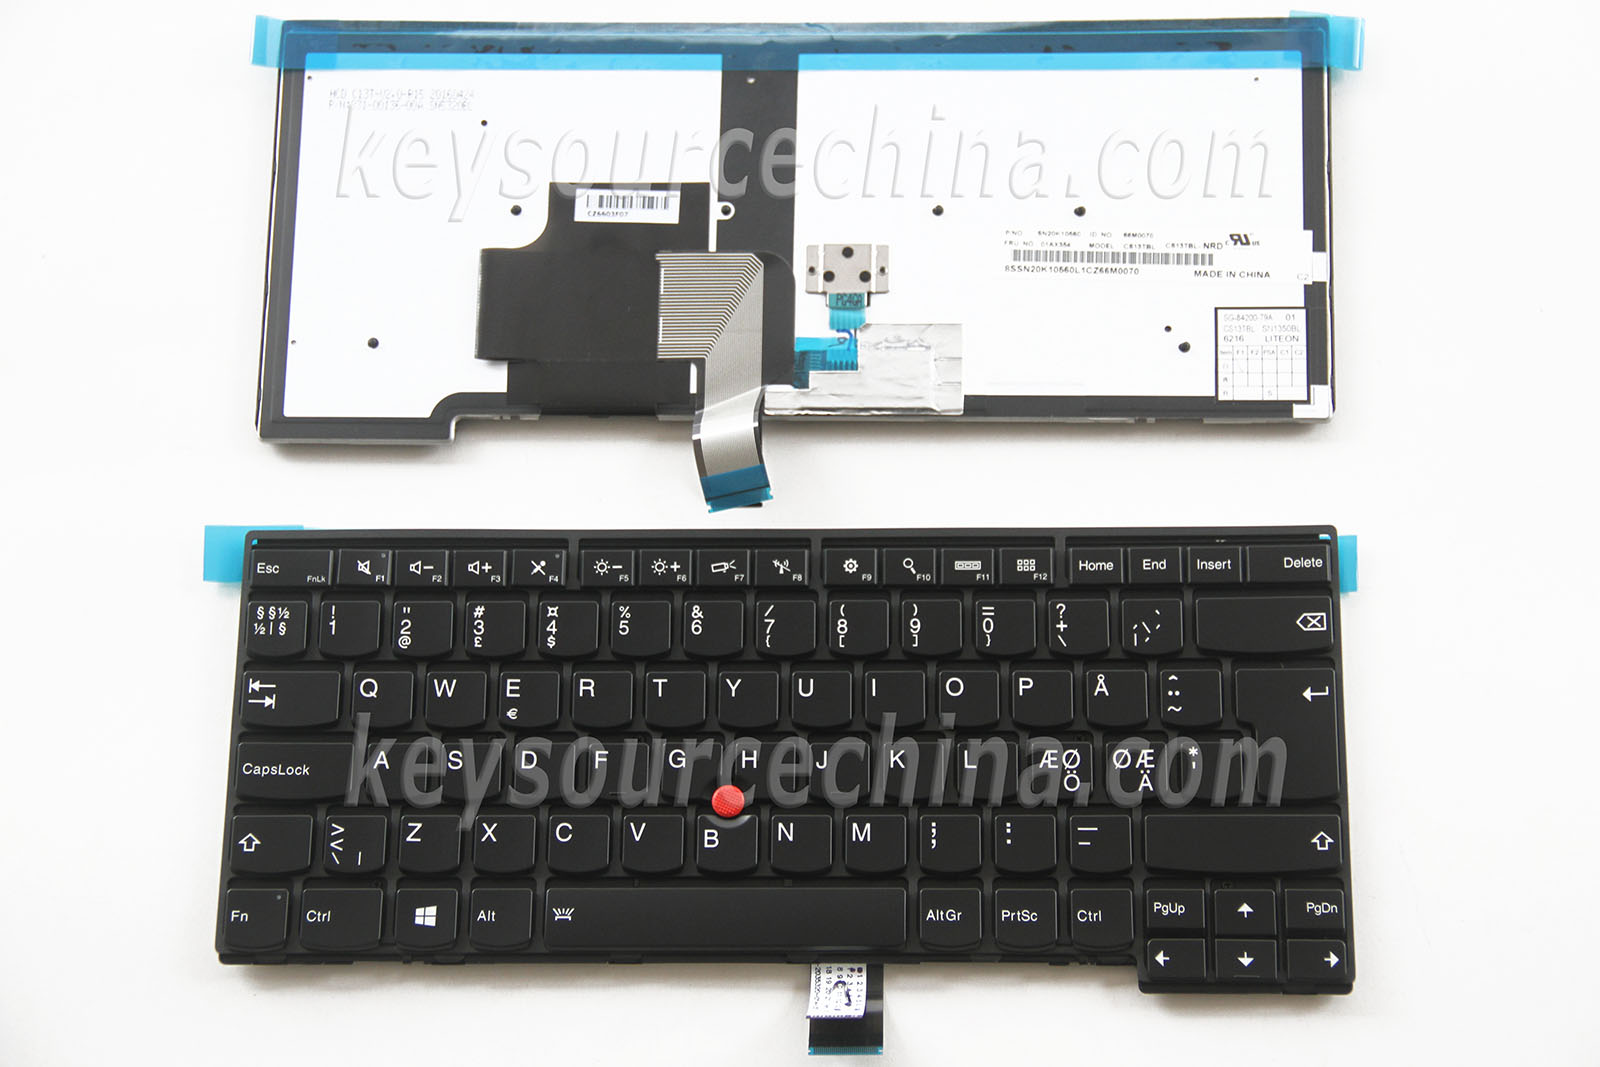 SN20K10560 Originalt Lenovo Thinkpad E431 E440 T431s T440 T440p T440s L440 T450 T450s T460 Backlit Nordic Laptop Keyboard